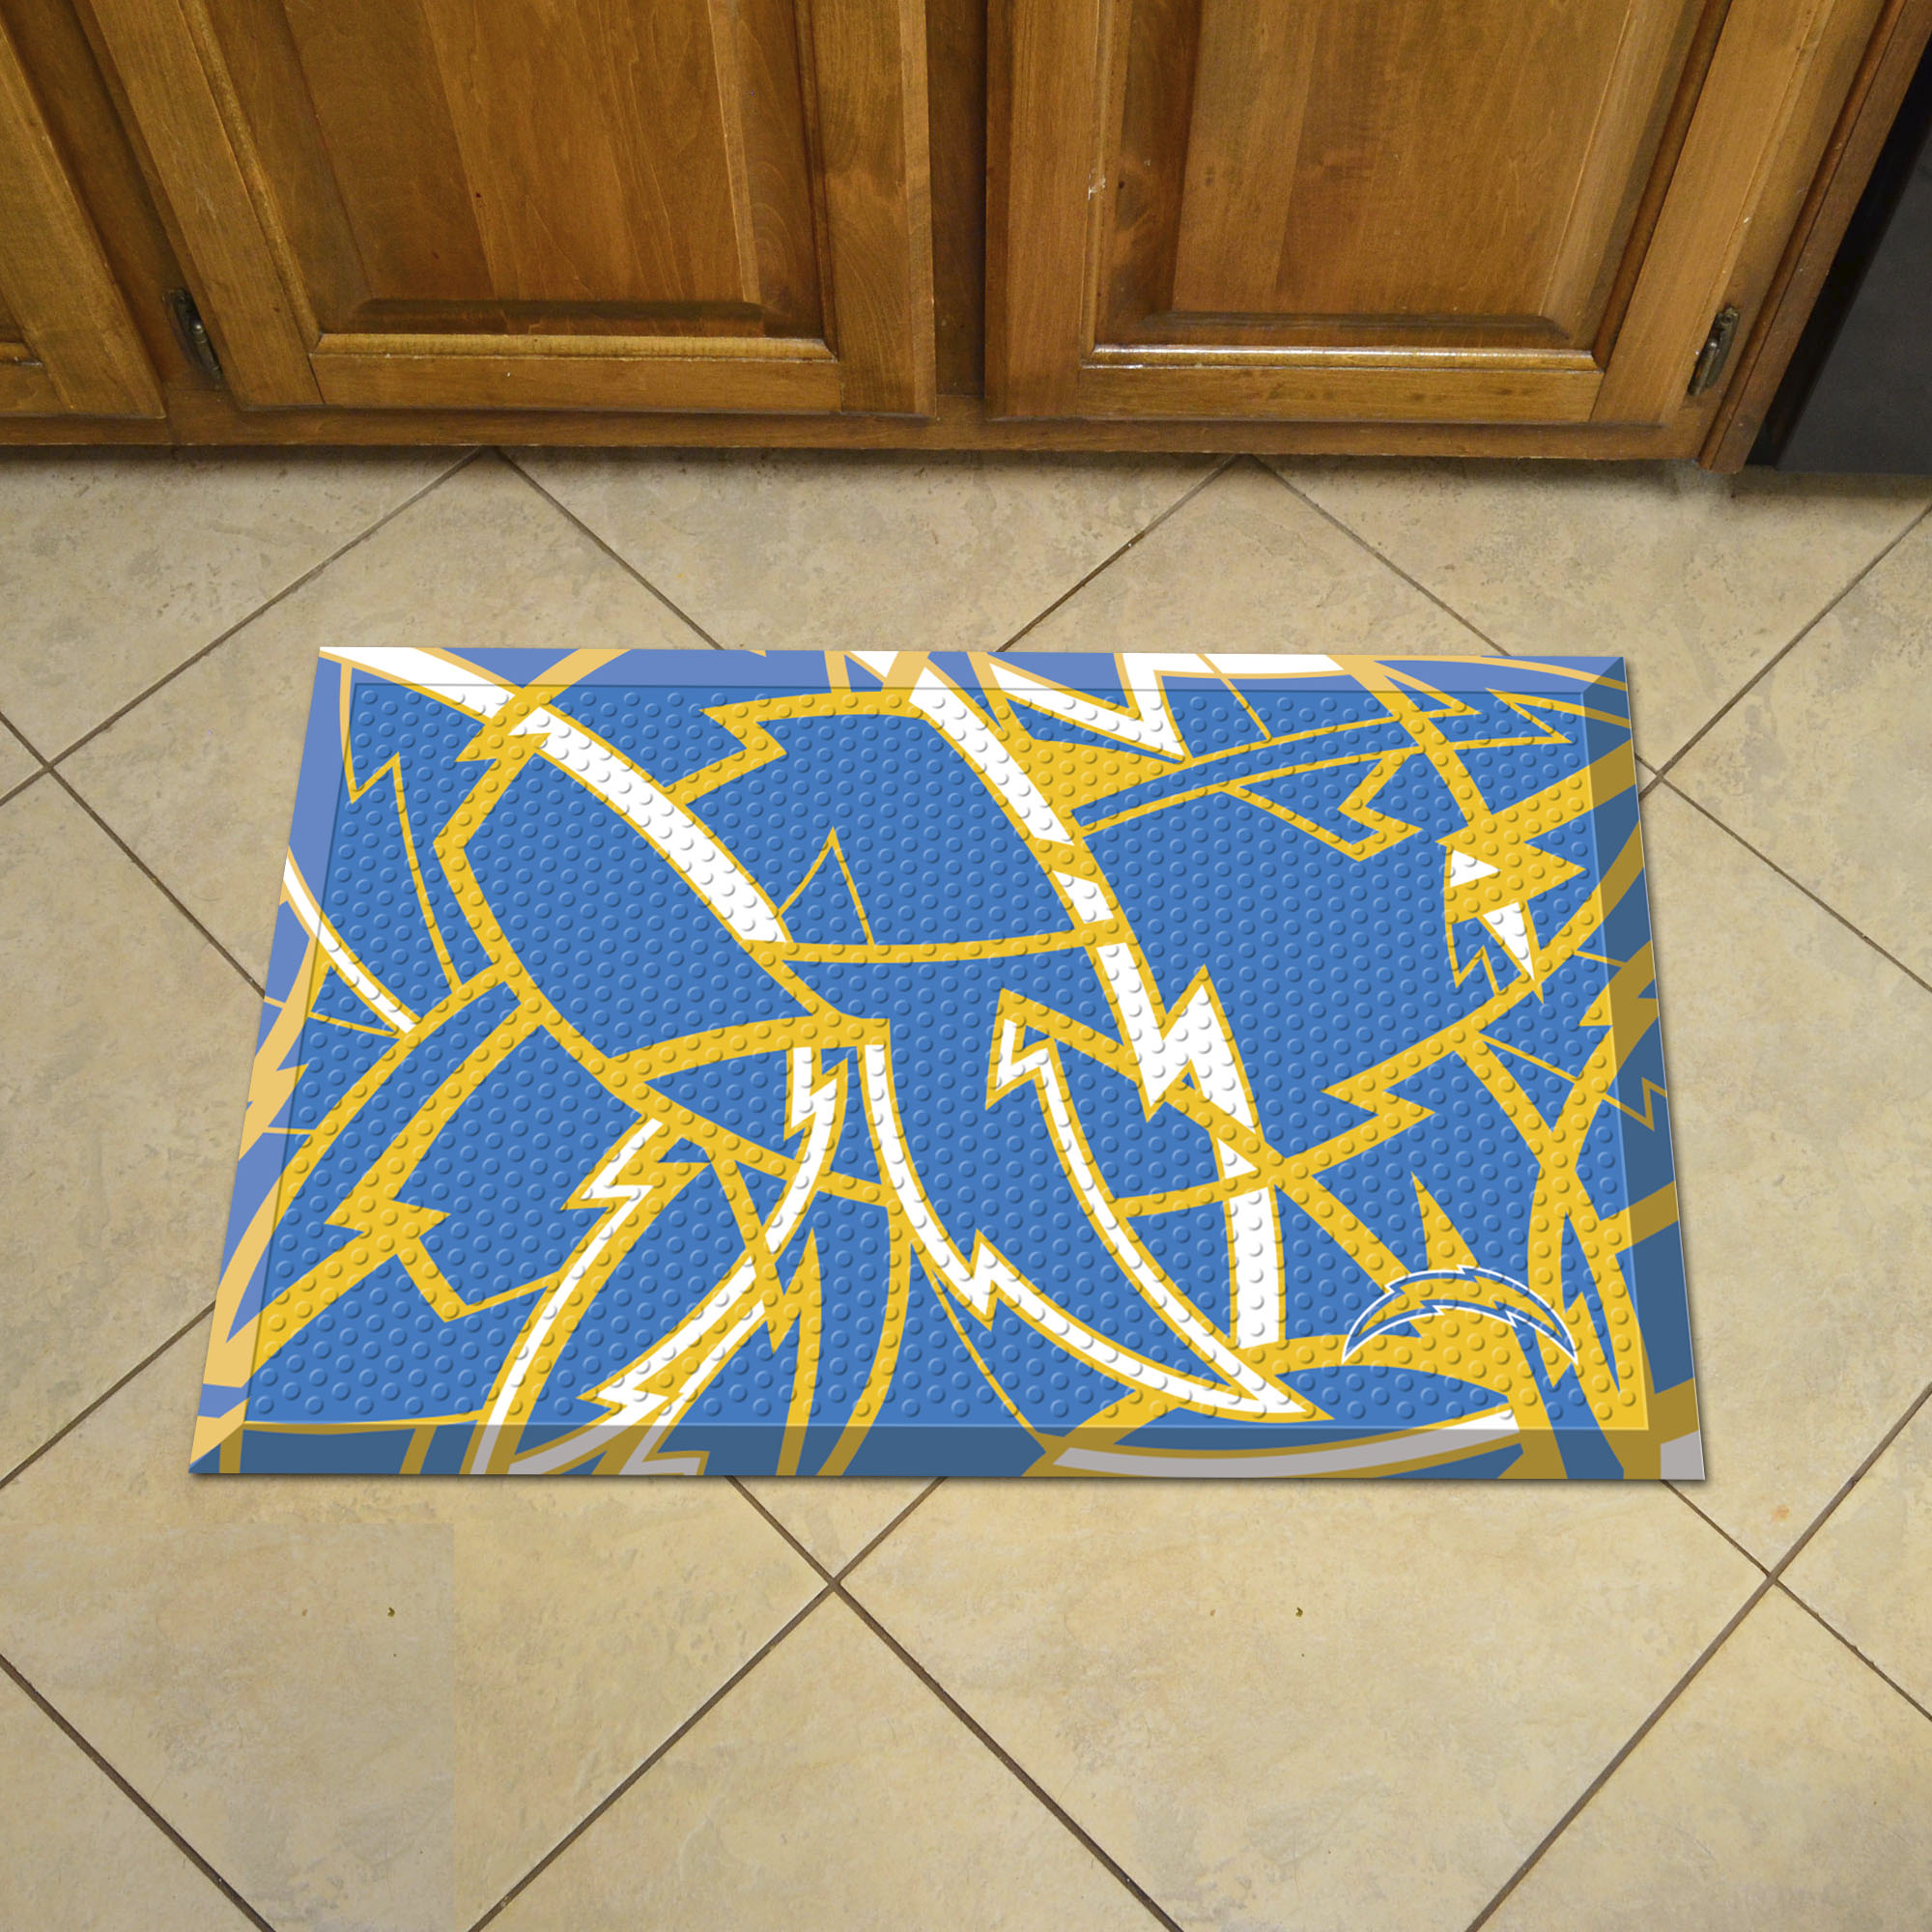 Los Angeles Chargers Quick Snap Scrapper Doormat - 19 x 30 rubber